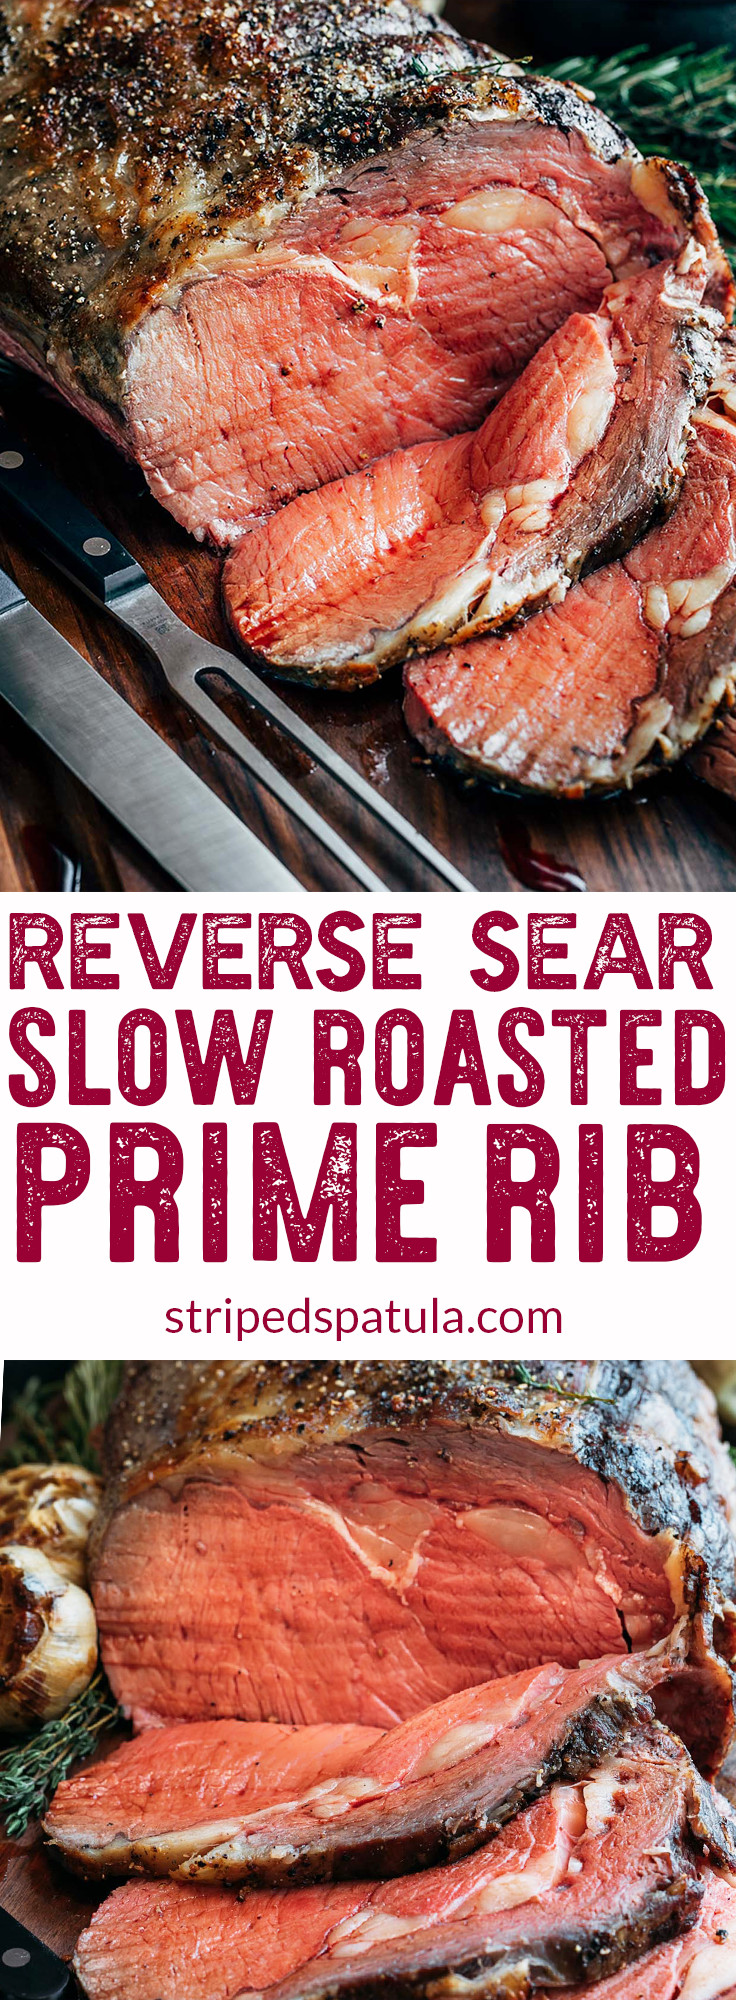 Prime Rib Recipe Slow Cooker
 Slow Roasted Prime Rib Recipe